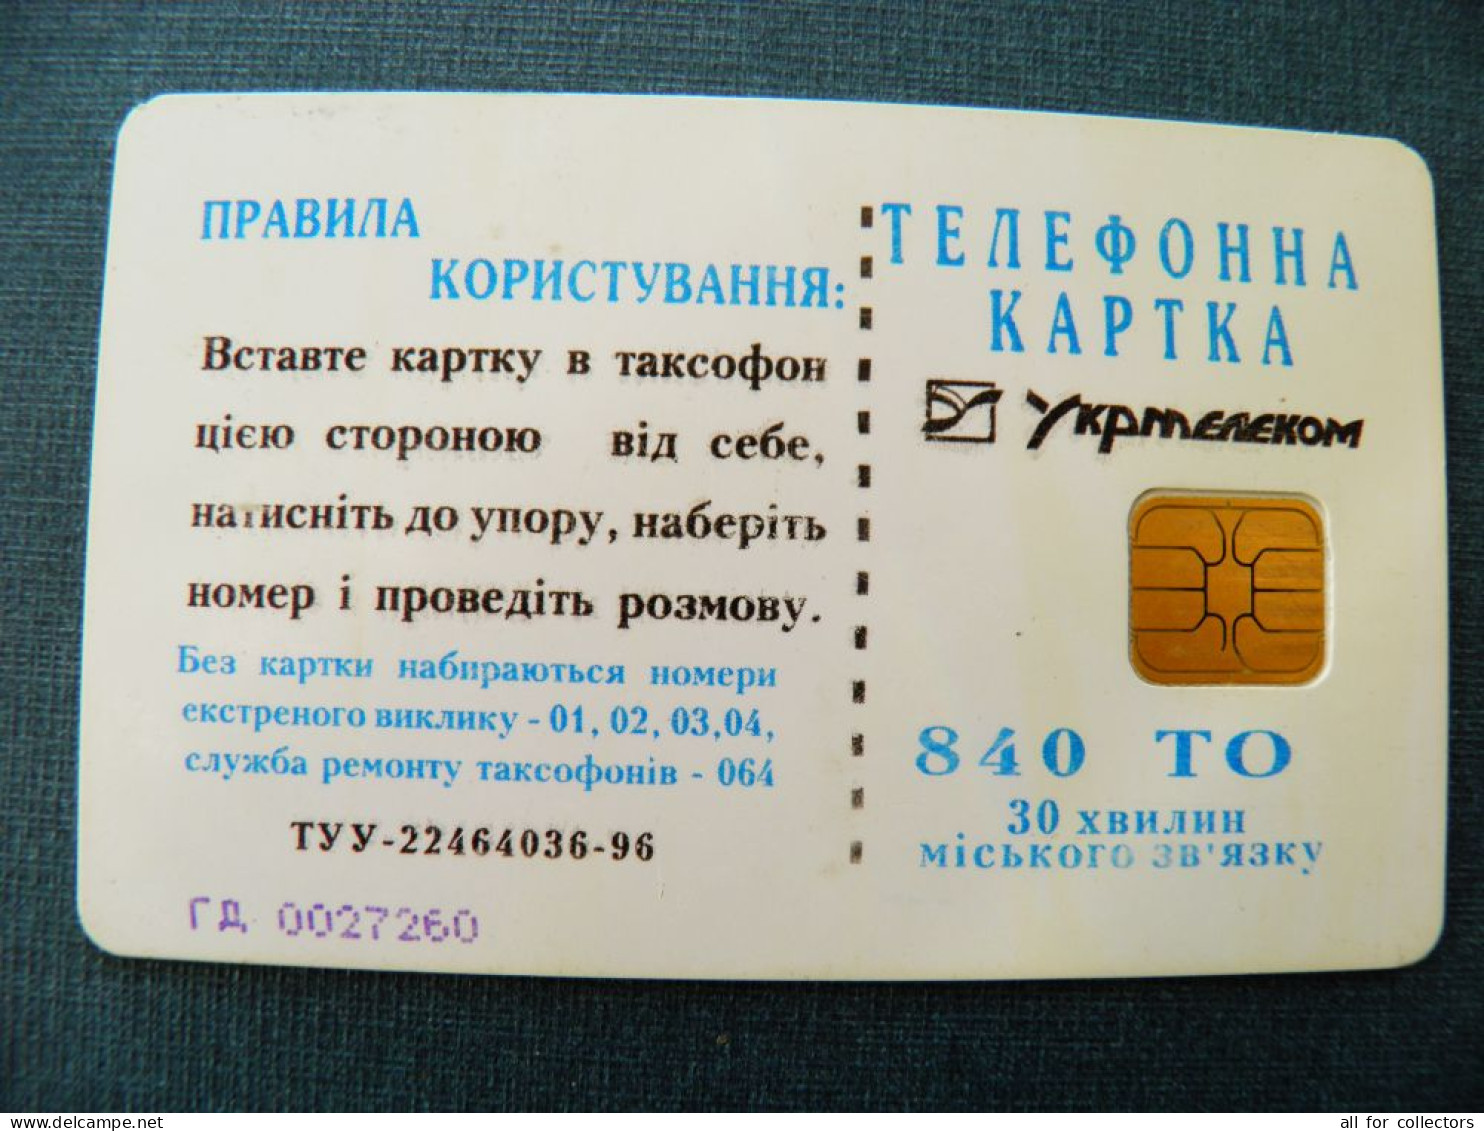 Ukraine Phonecard Chip Plant Berries Grapes Fruits 840 Units K245 10/97 30,000ex. Prefix Nr. GD (in Cyrillic) - Ucrania